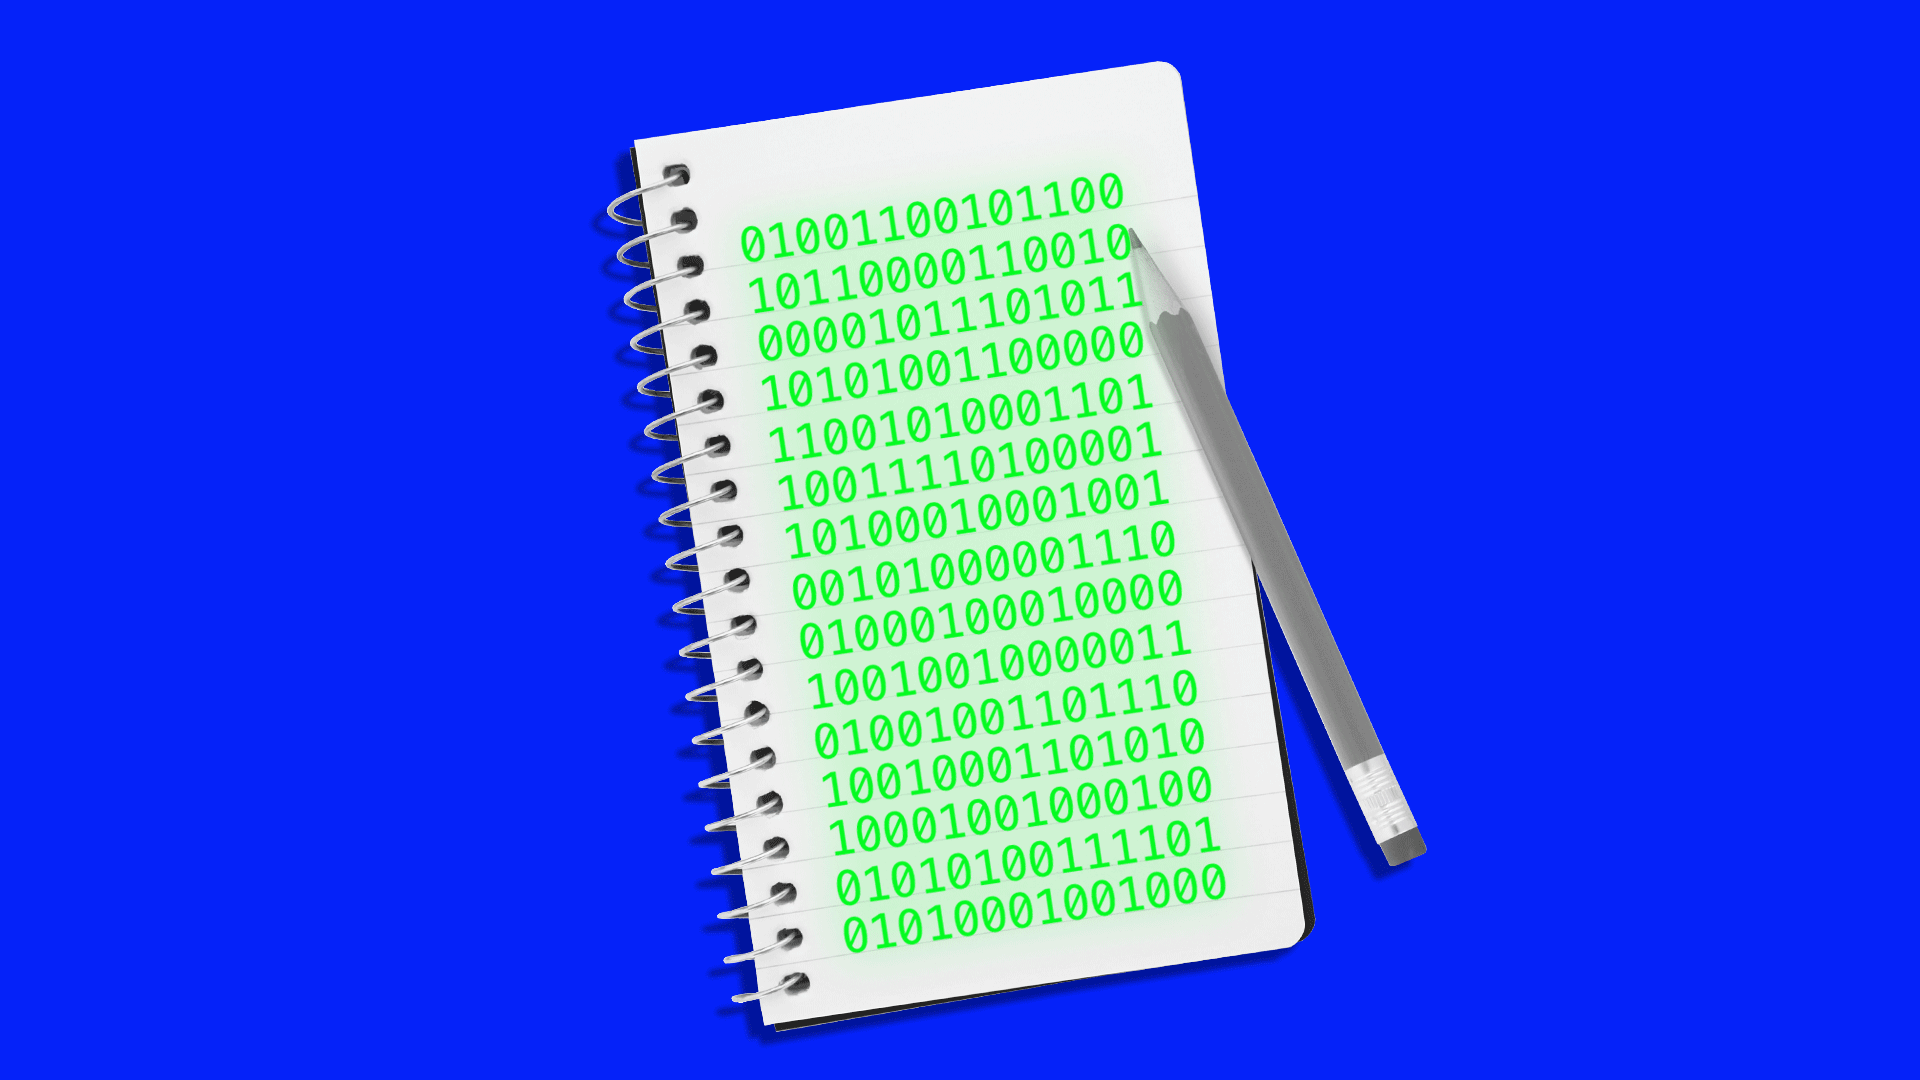 How long has binary code options been around